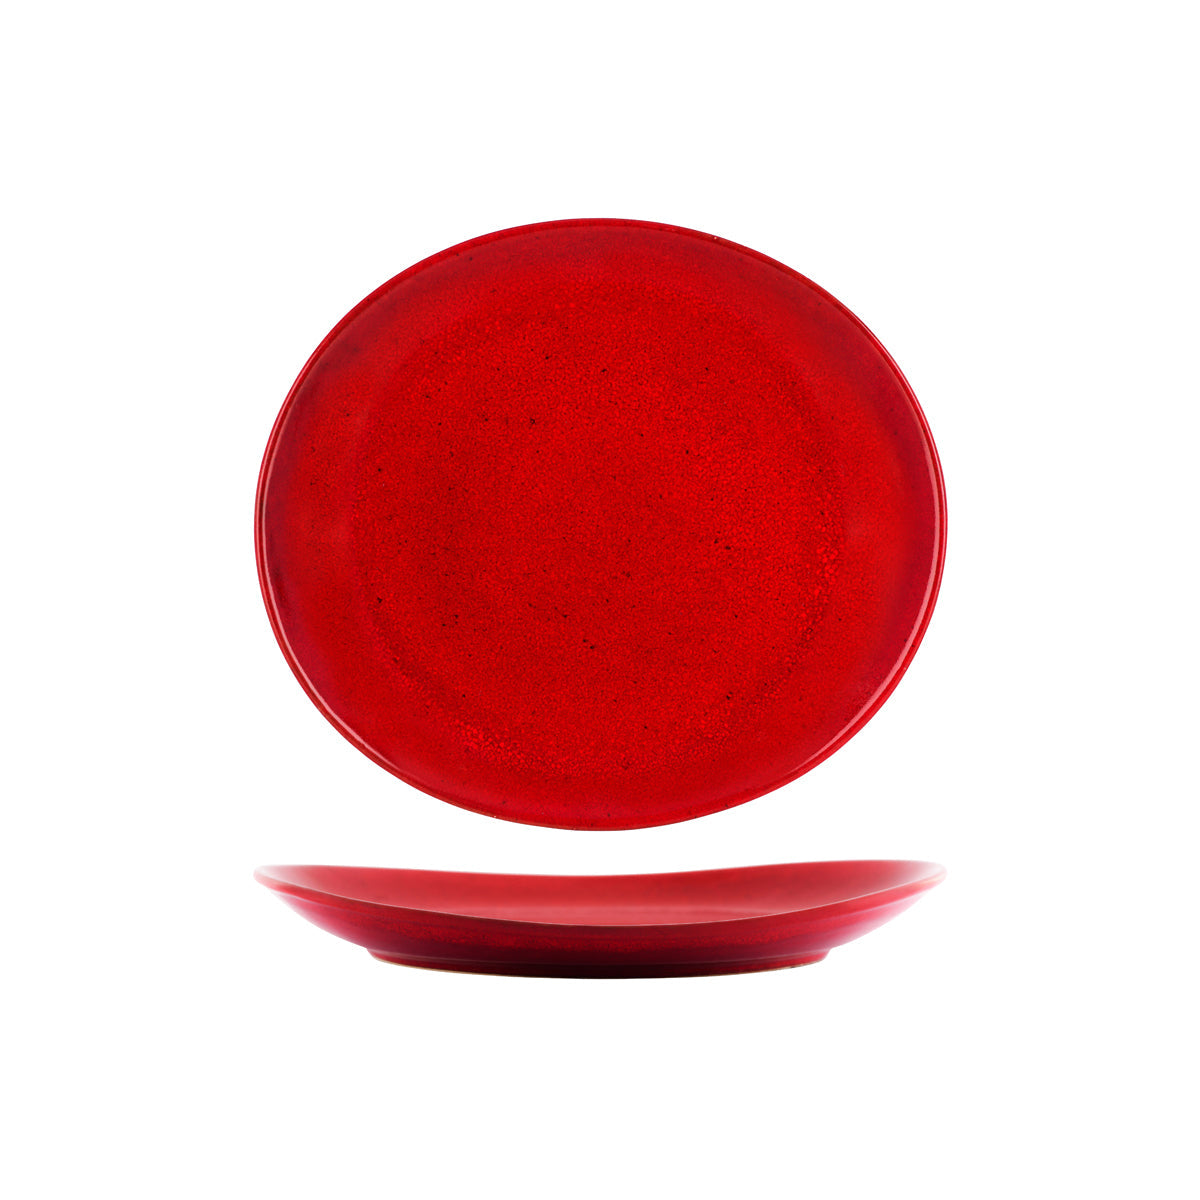 98223 Tablekraft Artistica Reactive Red Oval Plate 250mm Tomkin Australia Hospitality Supplies